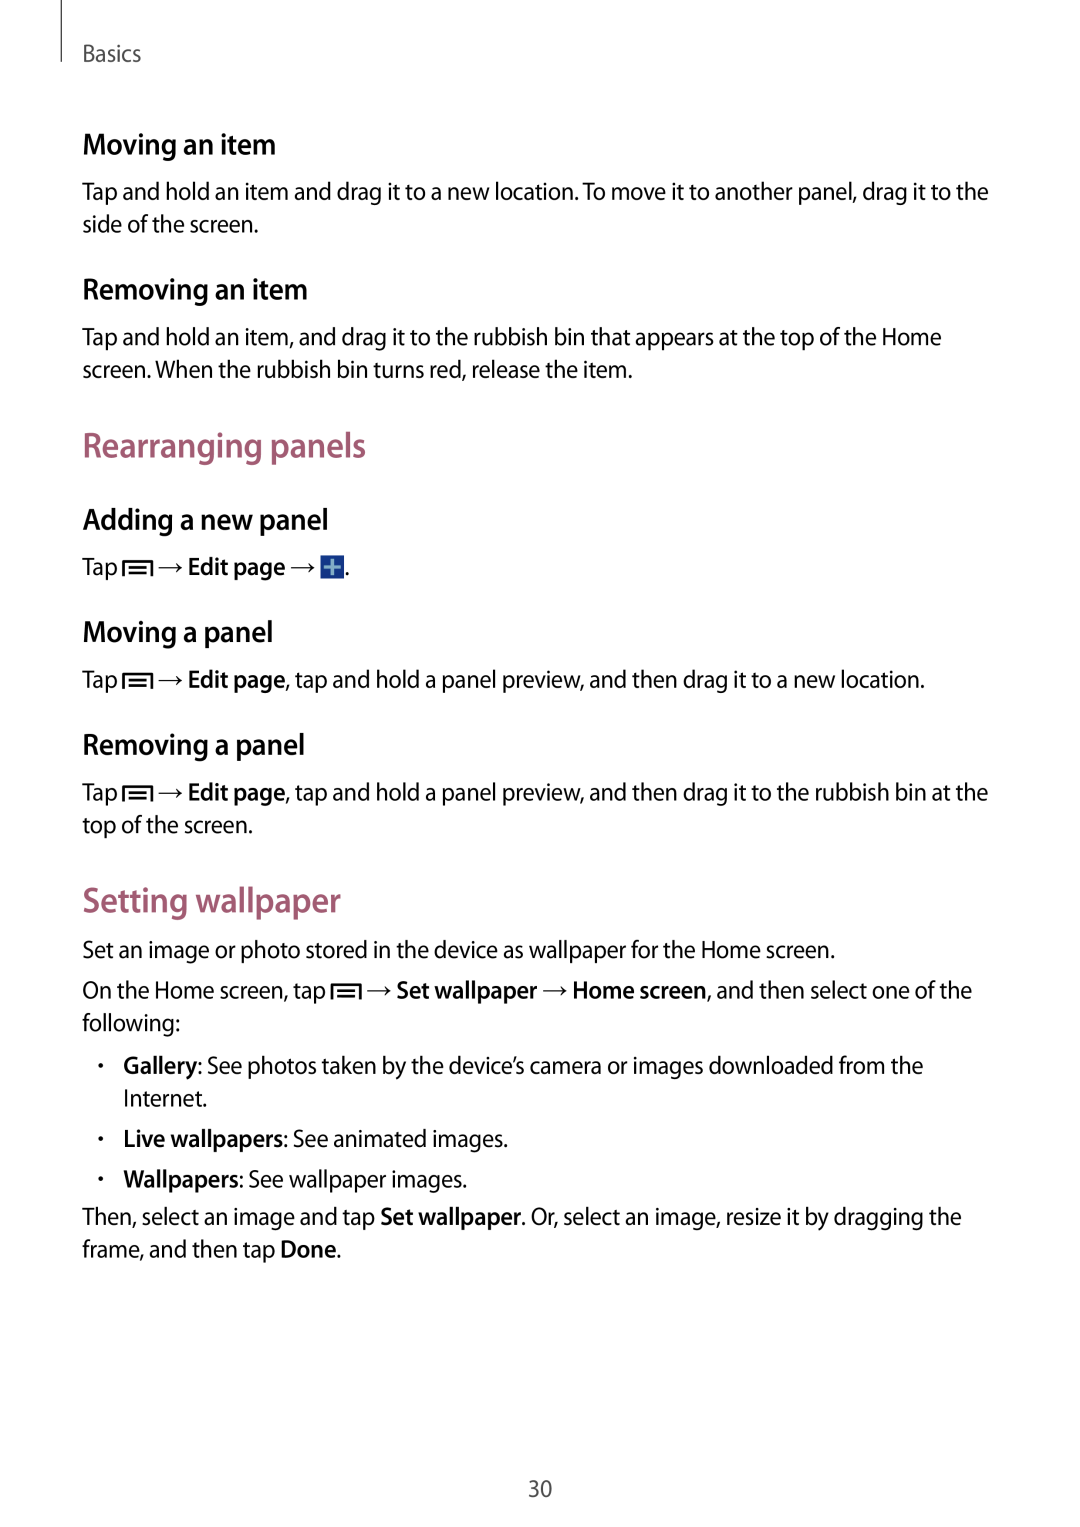 Samsung SM-G7102ZDATUN Rearranging panels, Setting wallpaper, Moving an item, Removing an item, Adding a new panel, Basics 